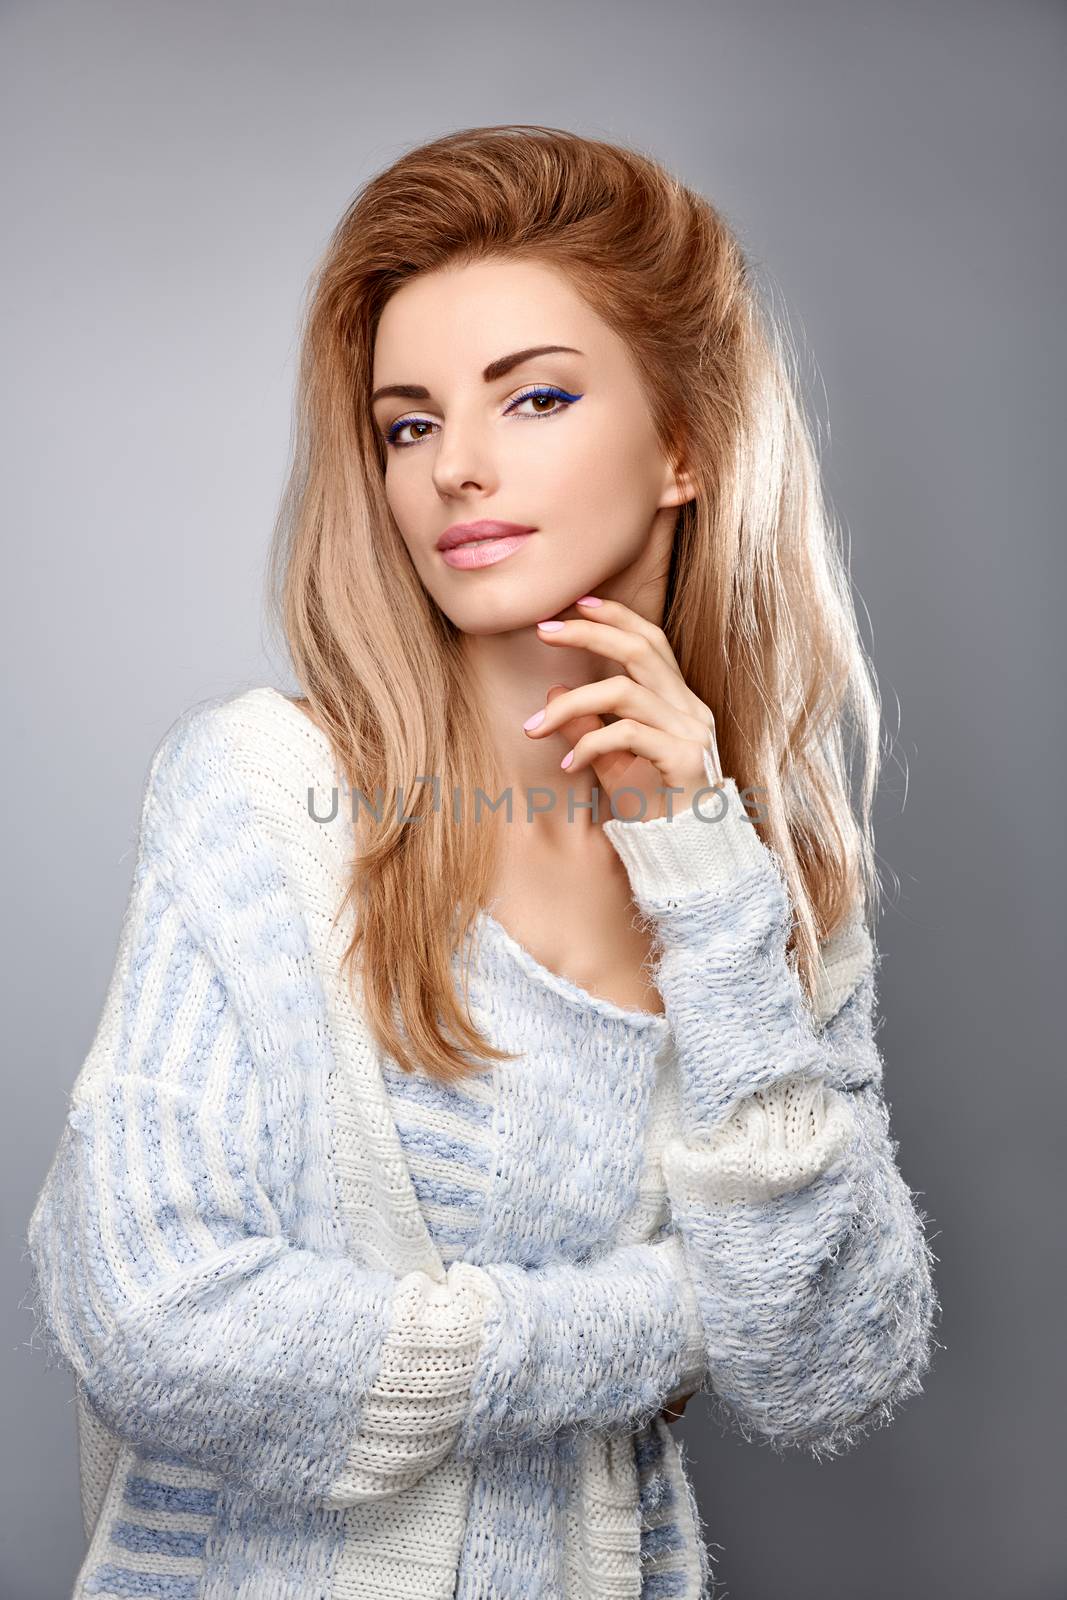 Beauty portrait woman,stylish warm knitted sweater by 918